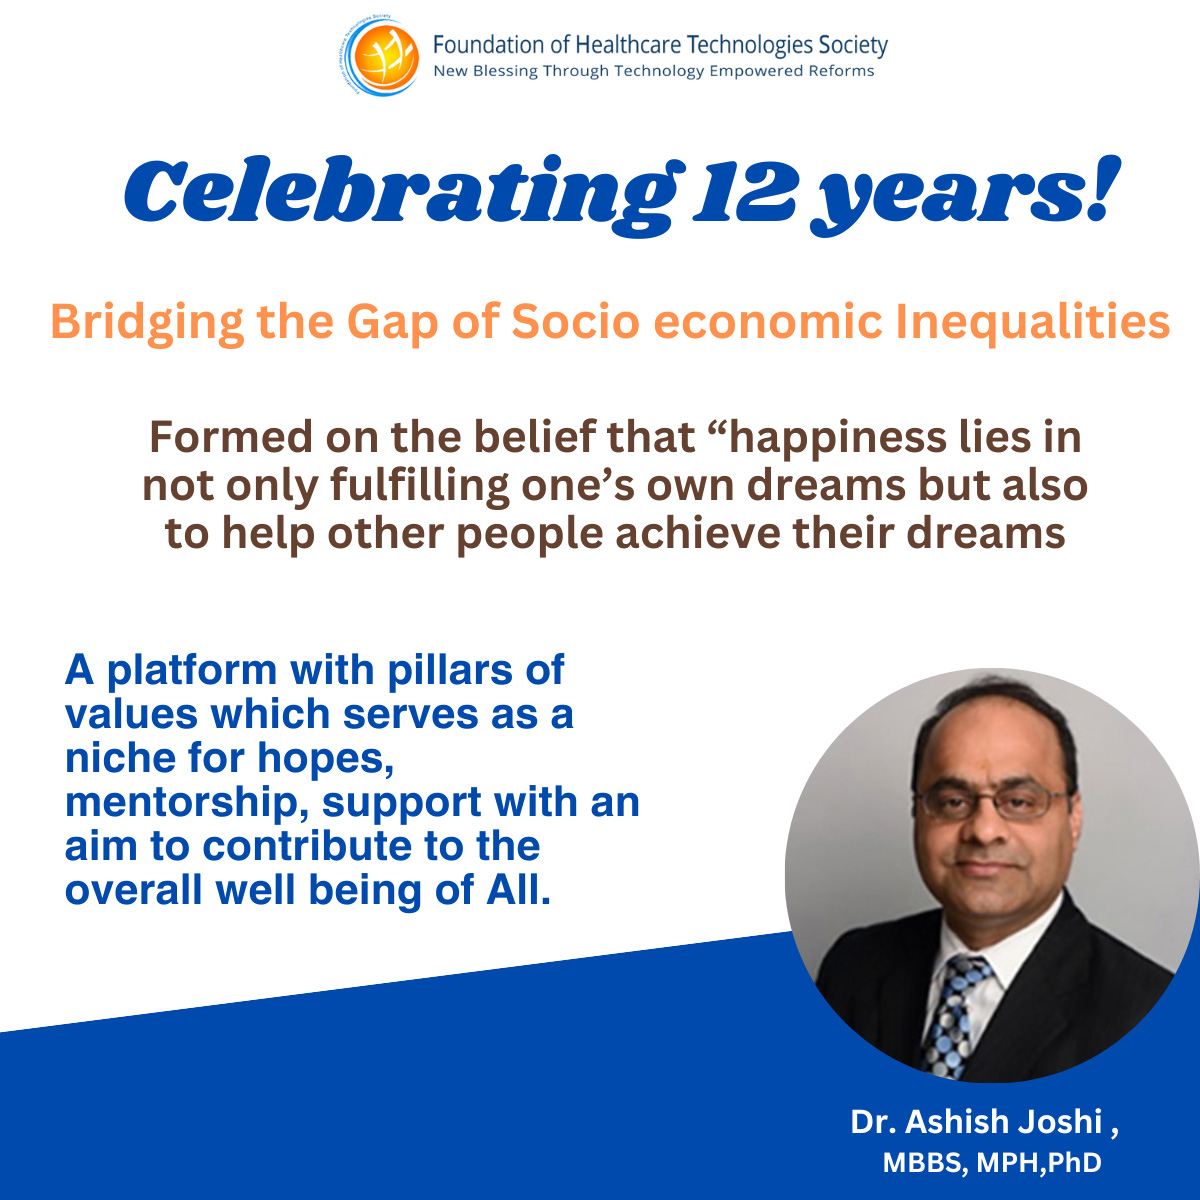 Celebrating 12 years, Bridging the Gap of Socioeconomic Inequalities - Ashish Joshi